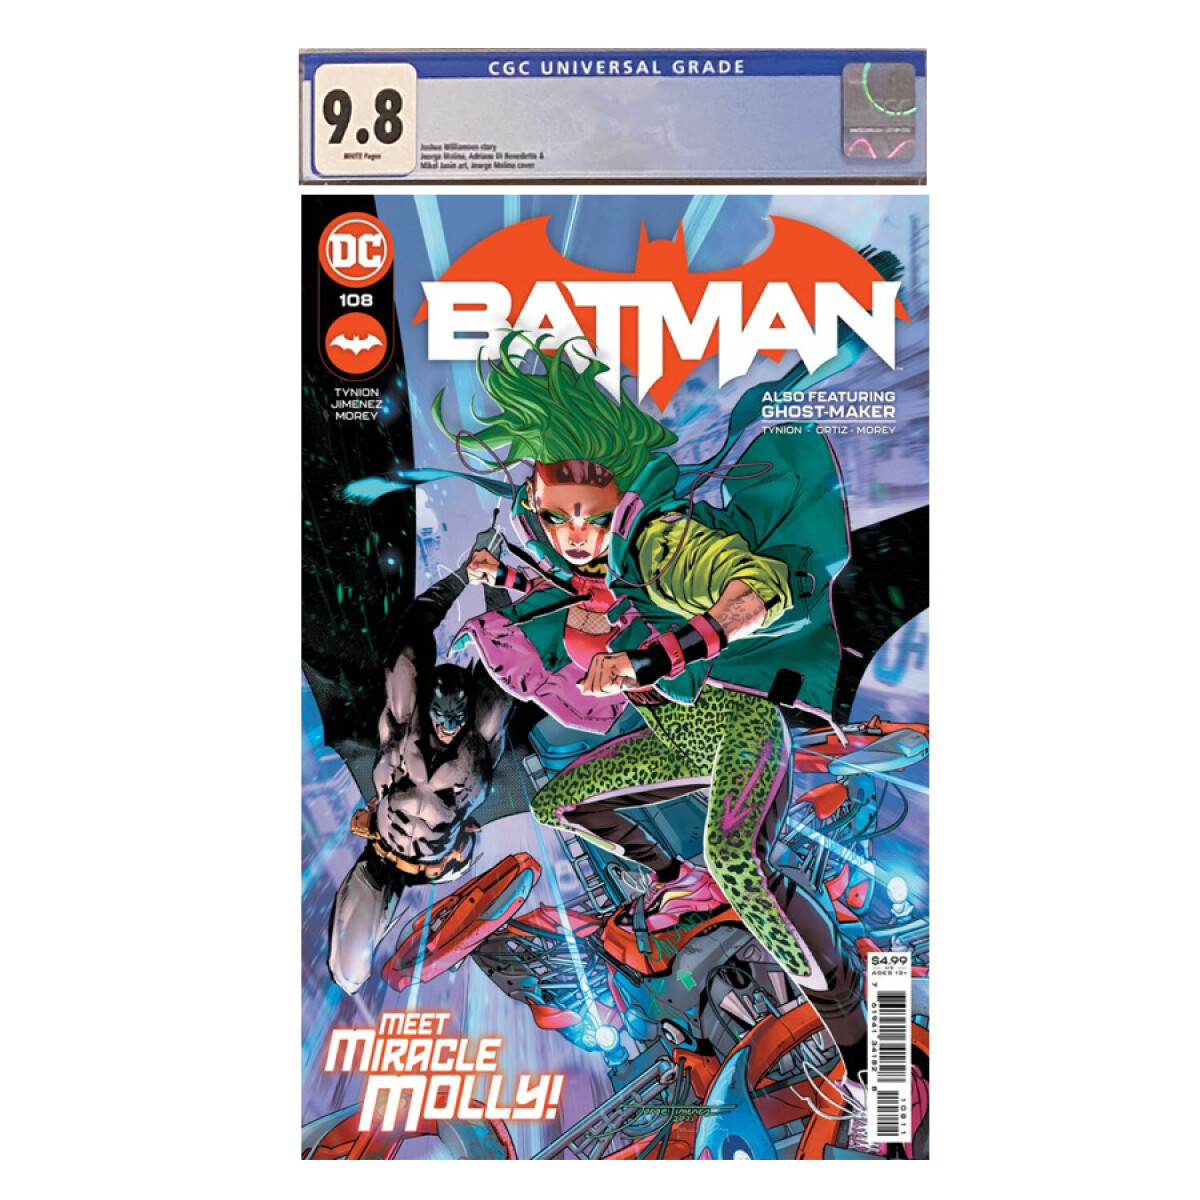 CGC Universal Grade Comic - Batman Ghost-Maker · Batman #108 